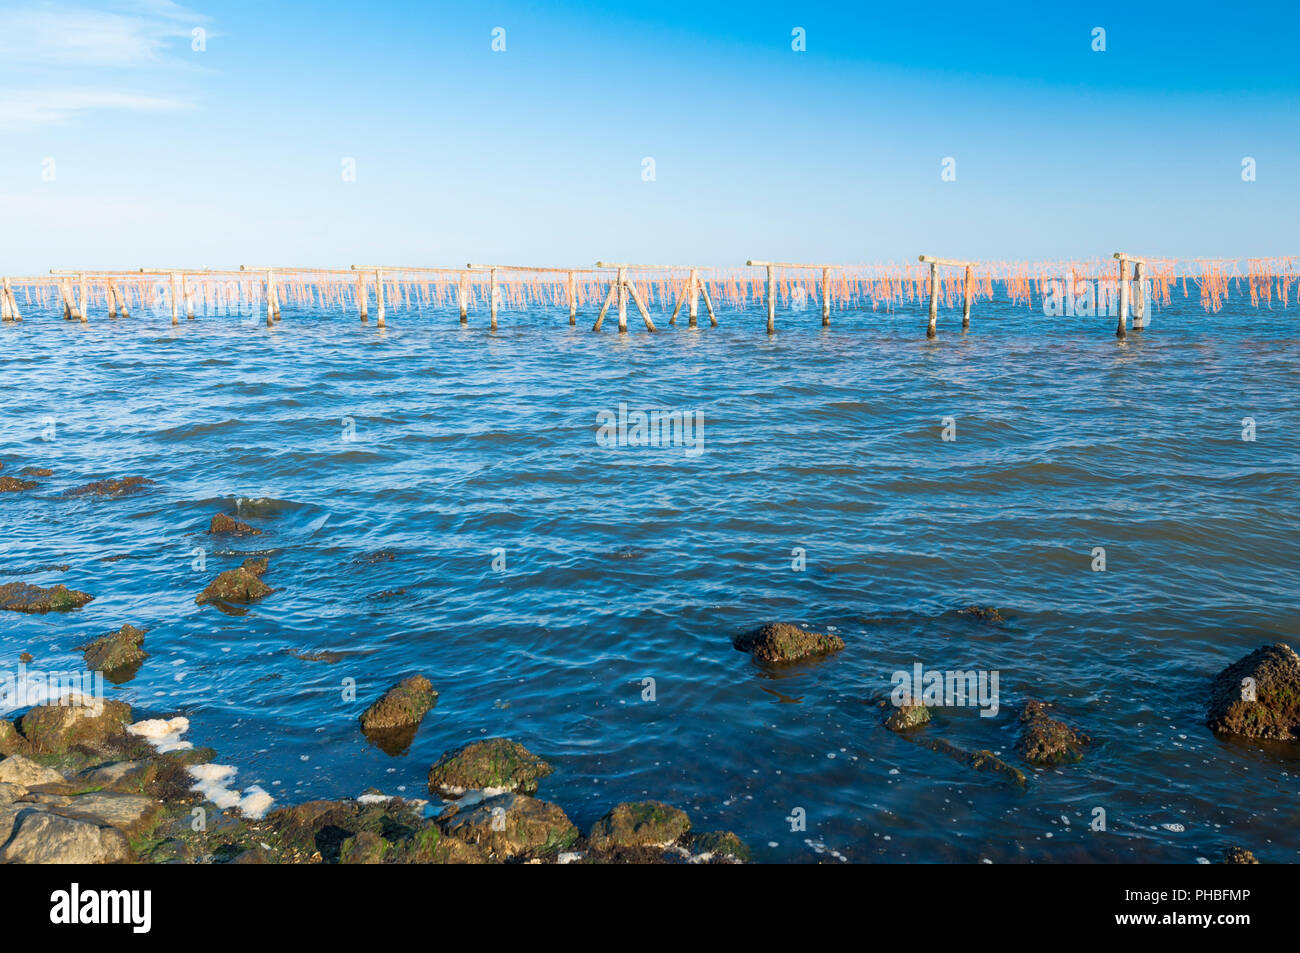 View of the Mussel Cultivation sistem at the Scardovari Lagoon, Po river estuary, Rovigo, Veneto, Italy Stock Photo